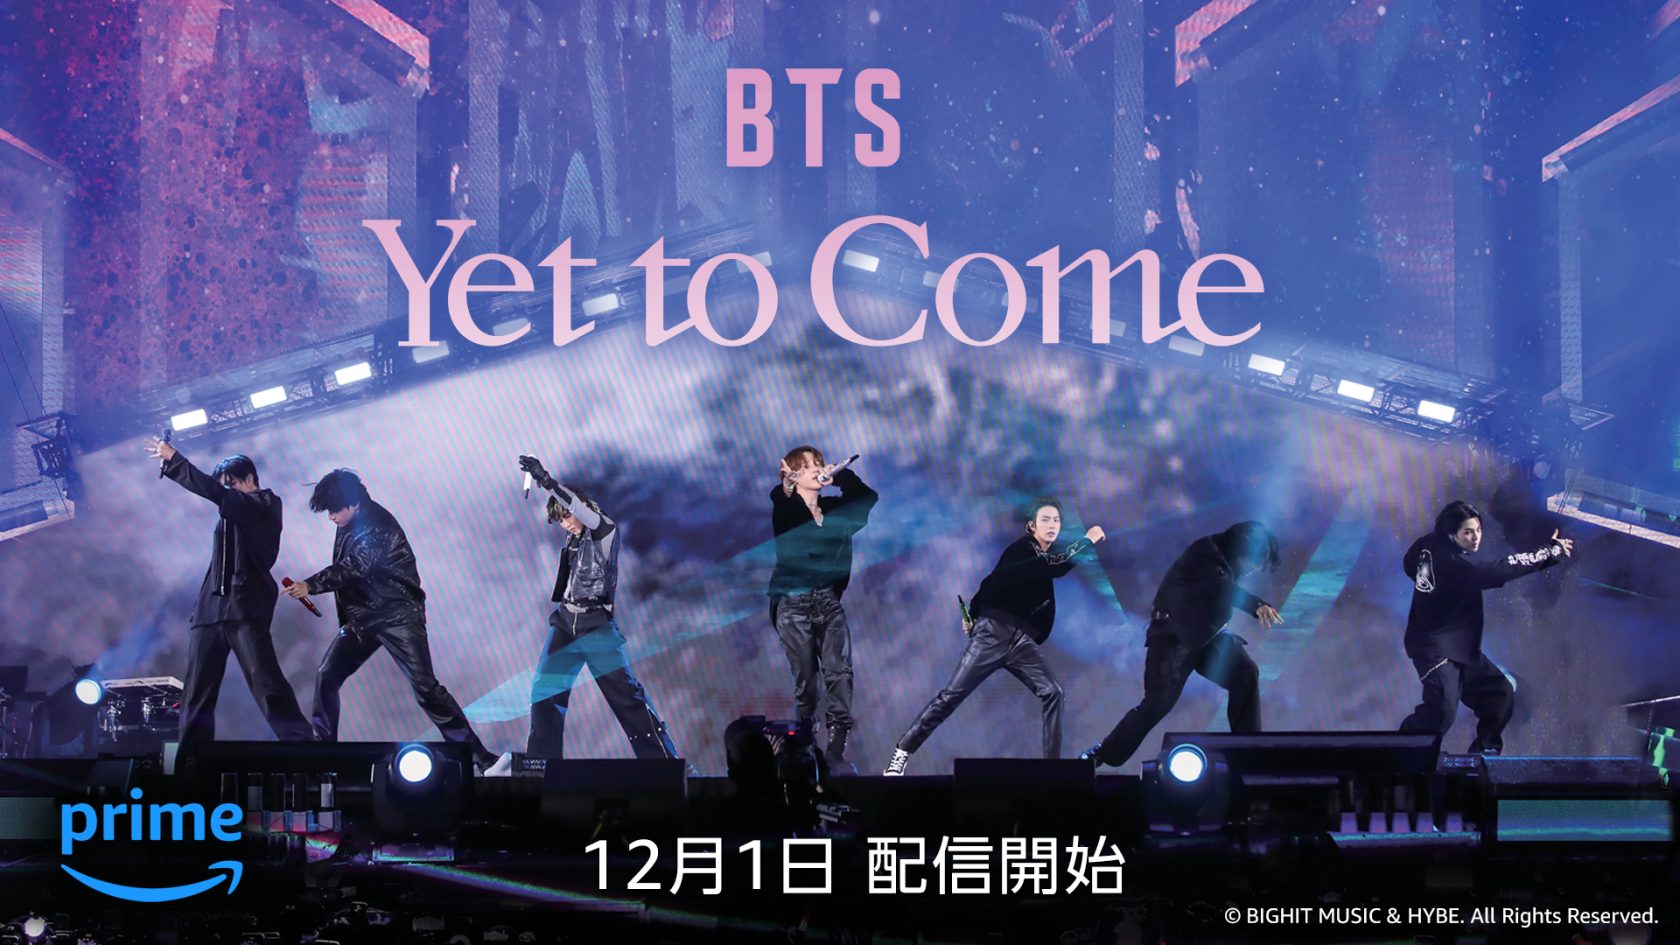 BTSのコンサート映画「BTS:Yet ToCome」をアマプラで独占配信